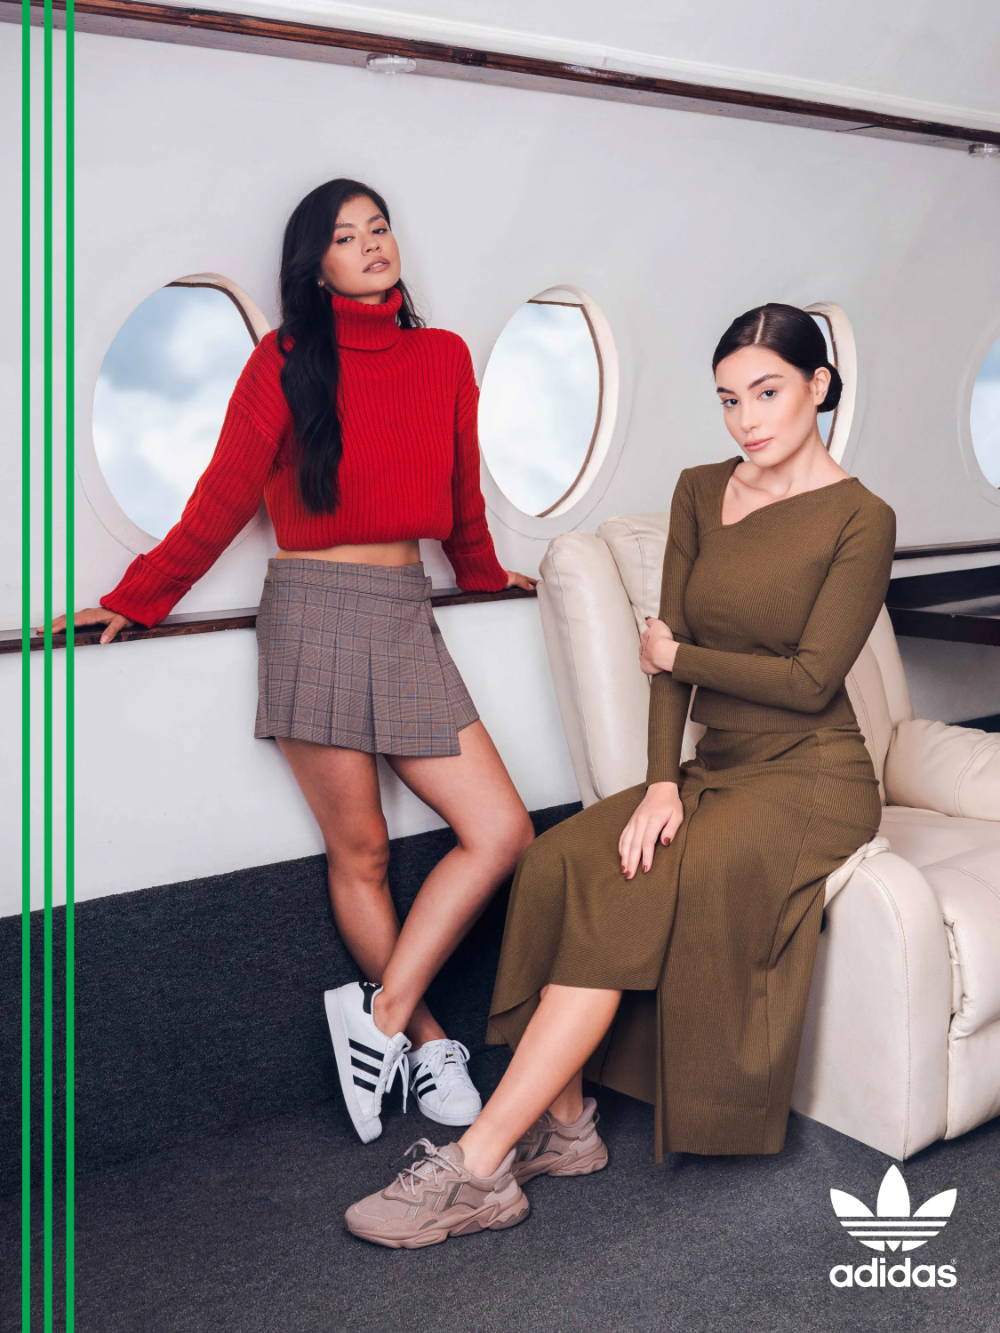 2 female models on private jet